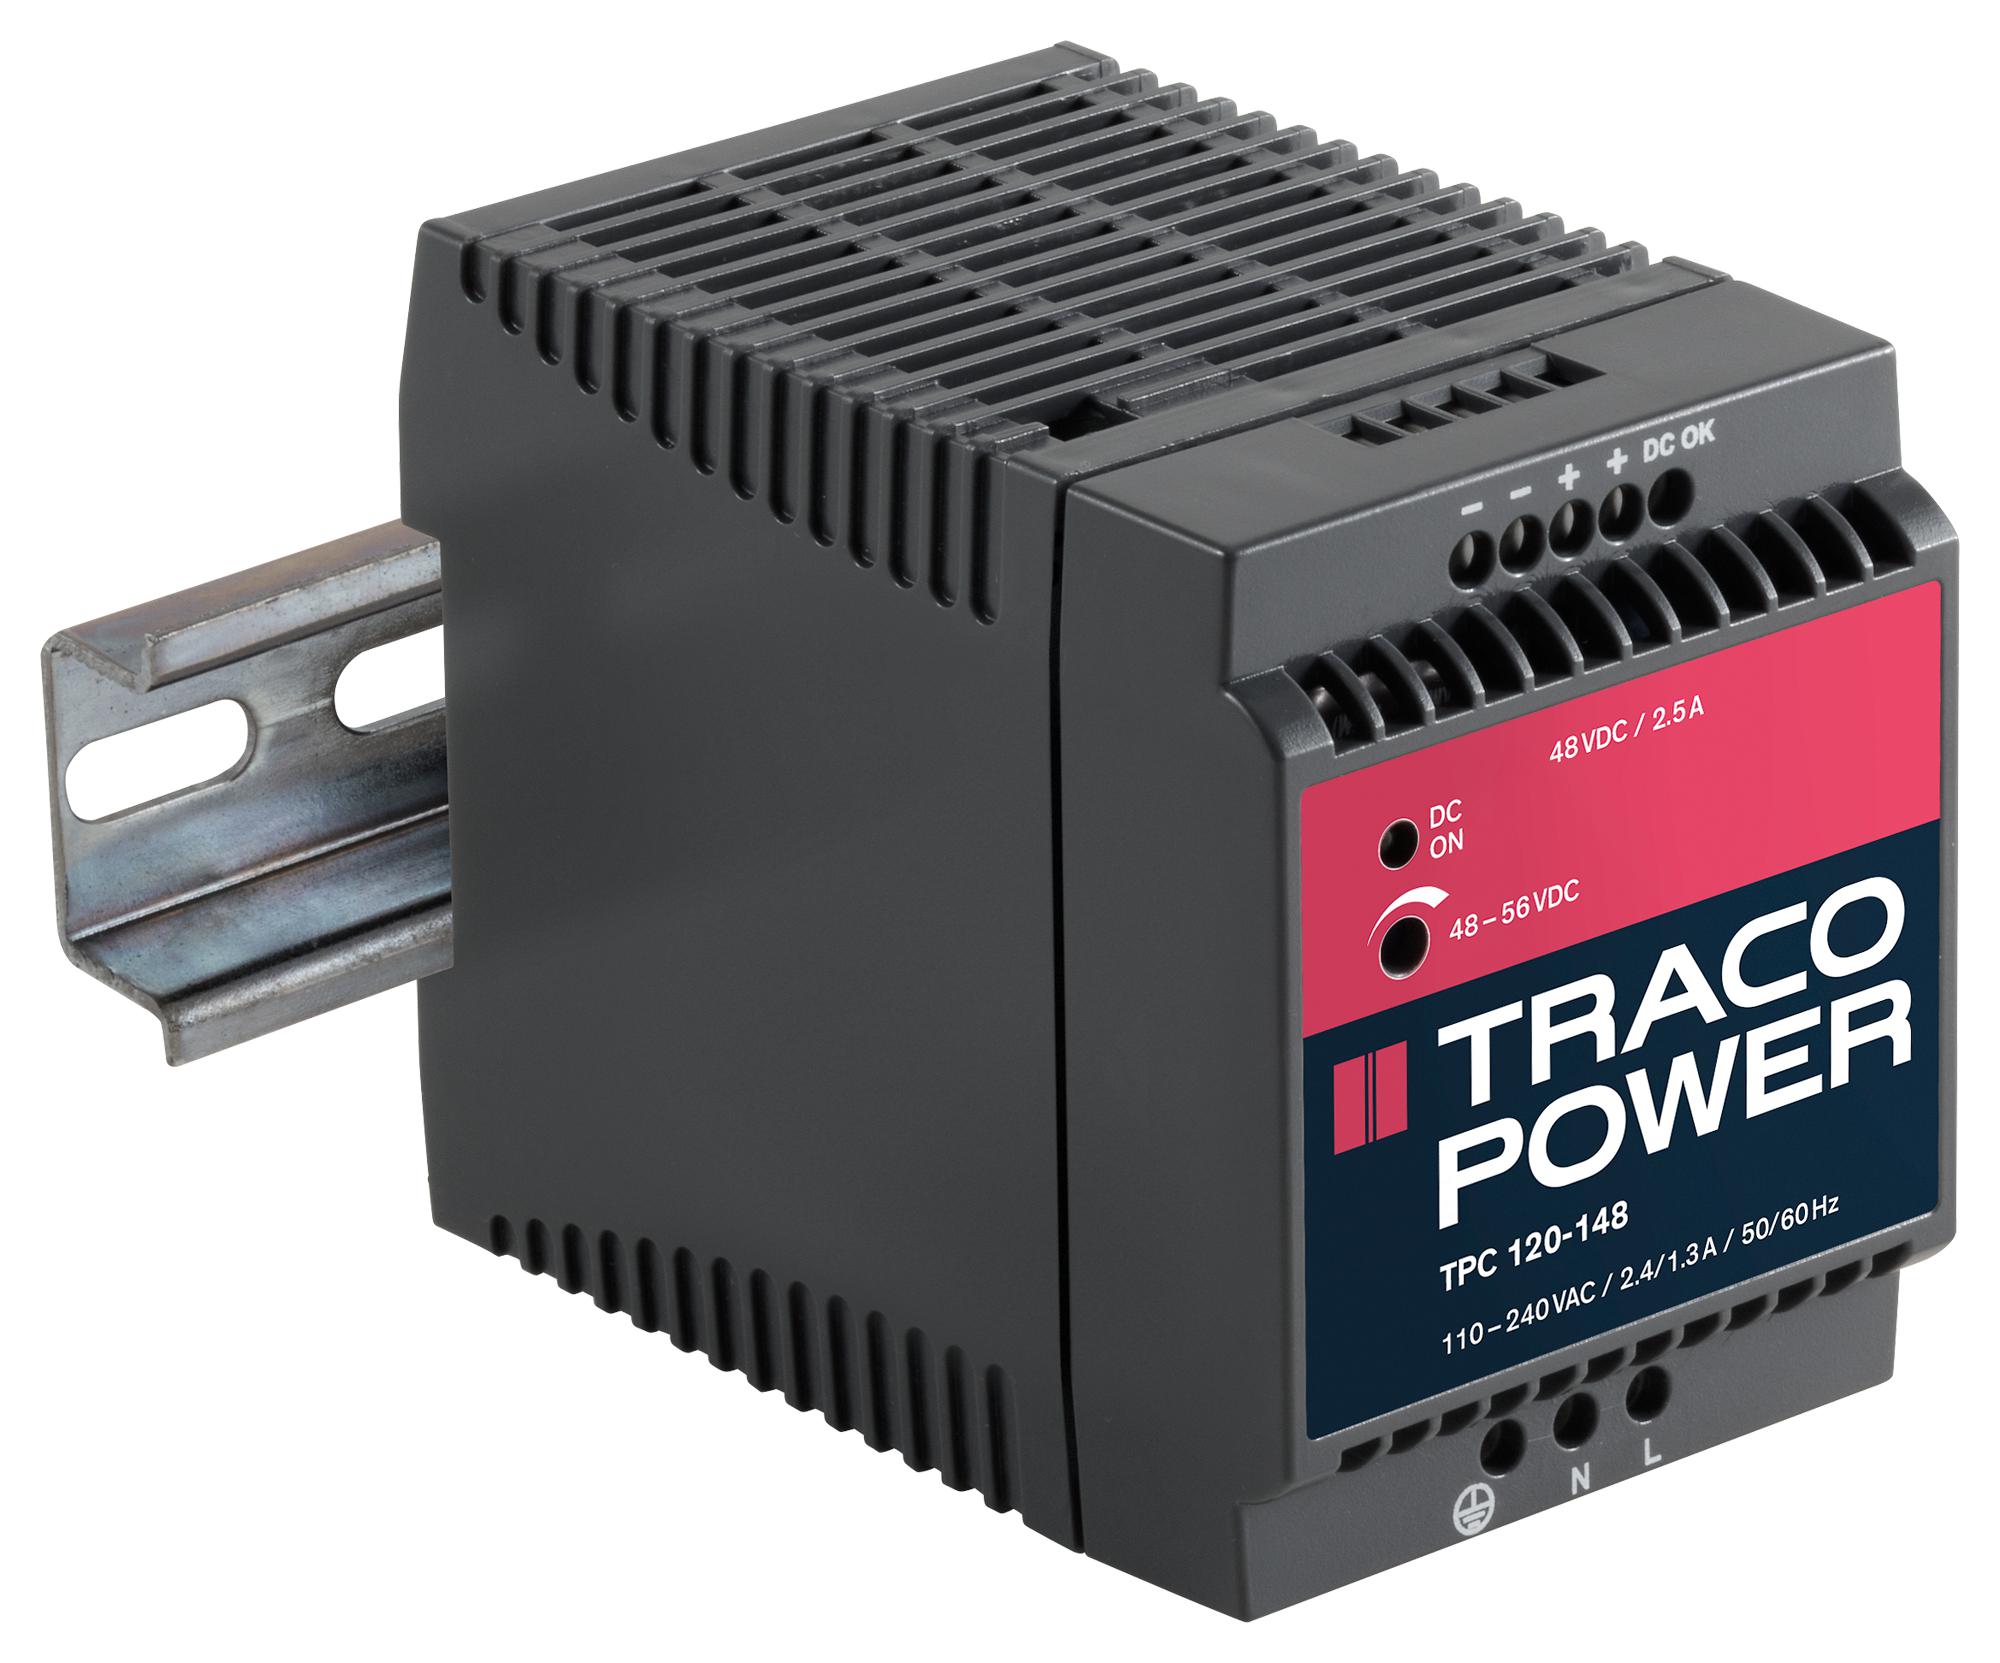 120 112. TRACO Power TCL 120-124. TRACO Power AC/DC. Источник питания tcl120-124c 'TRACO Power". Преобразователь TRACO Power.